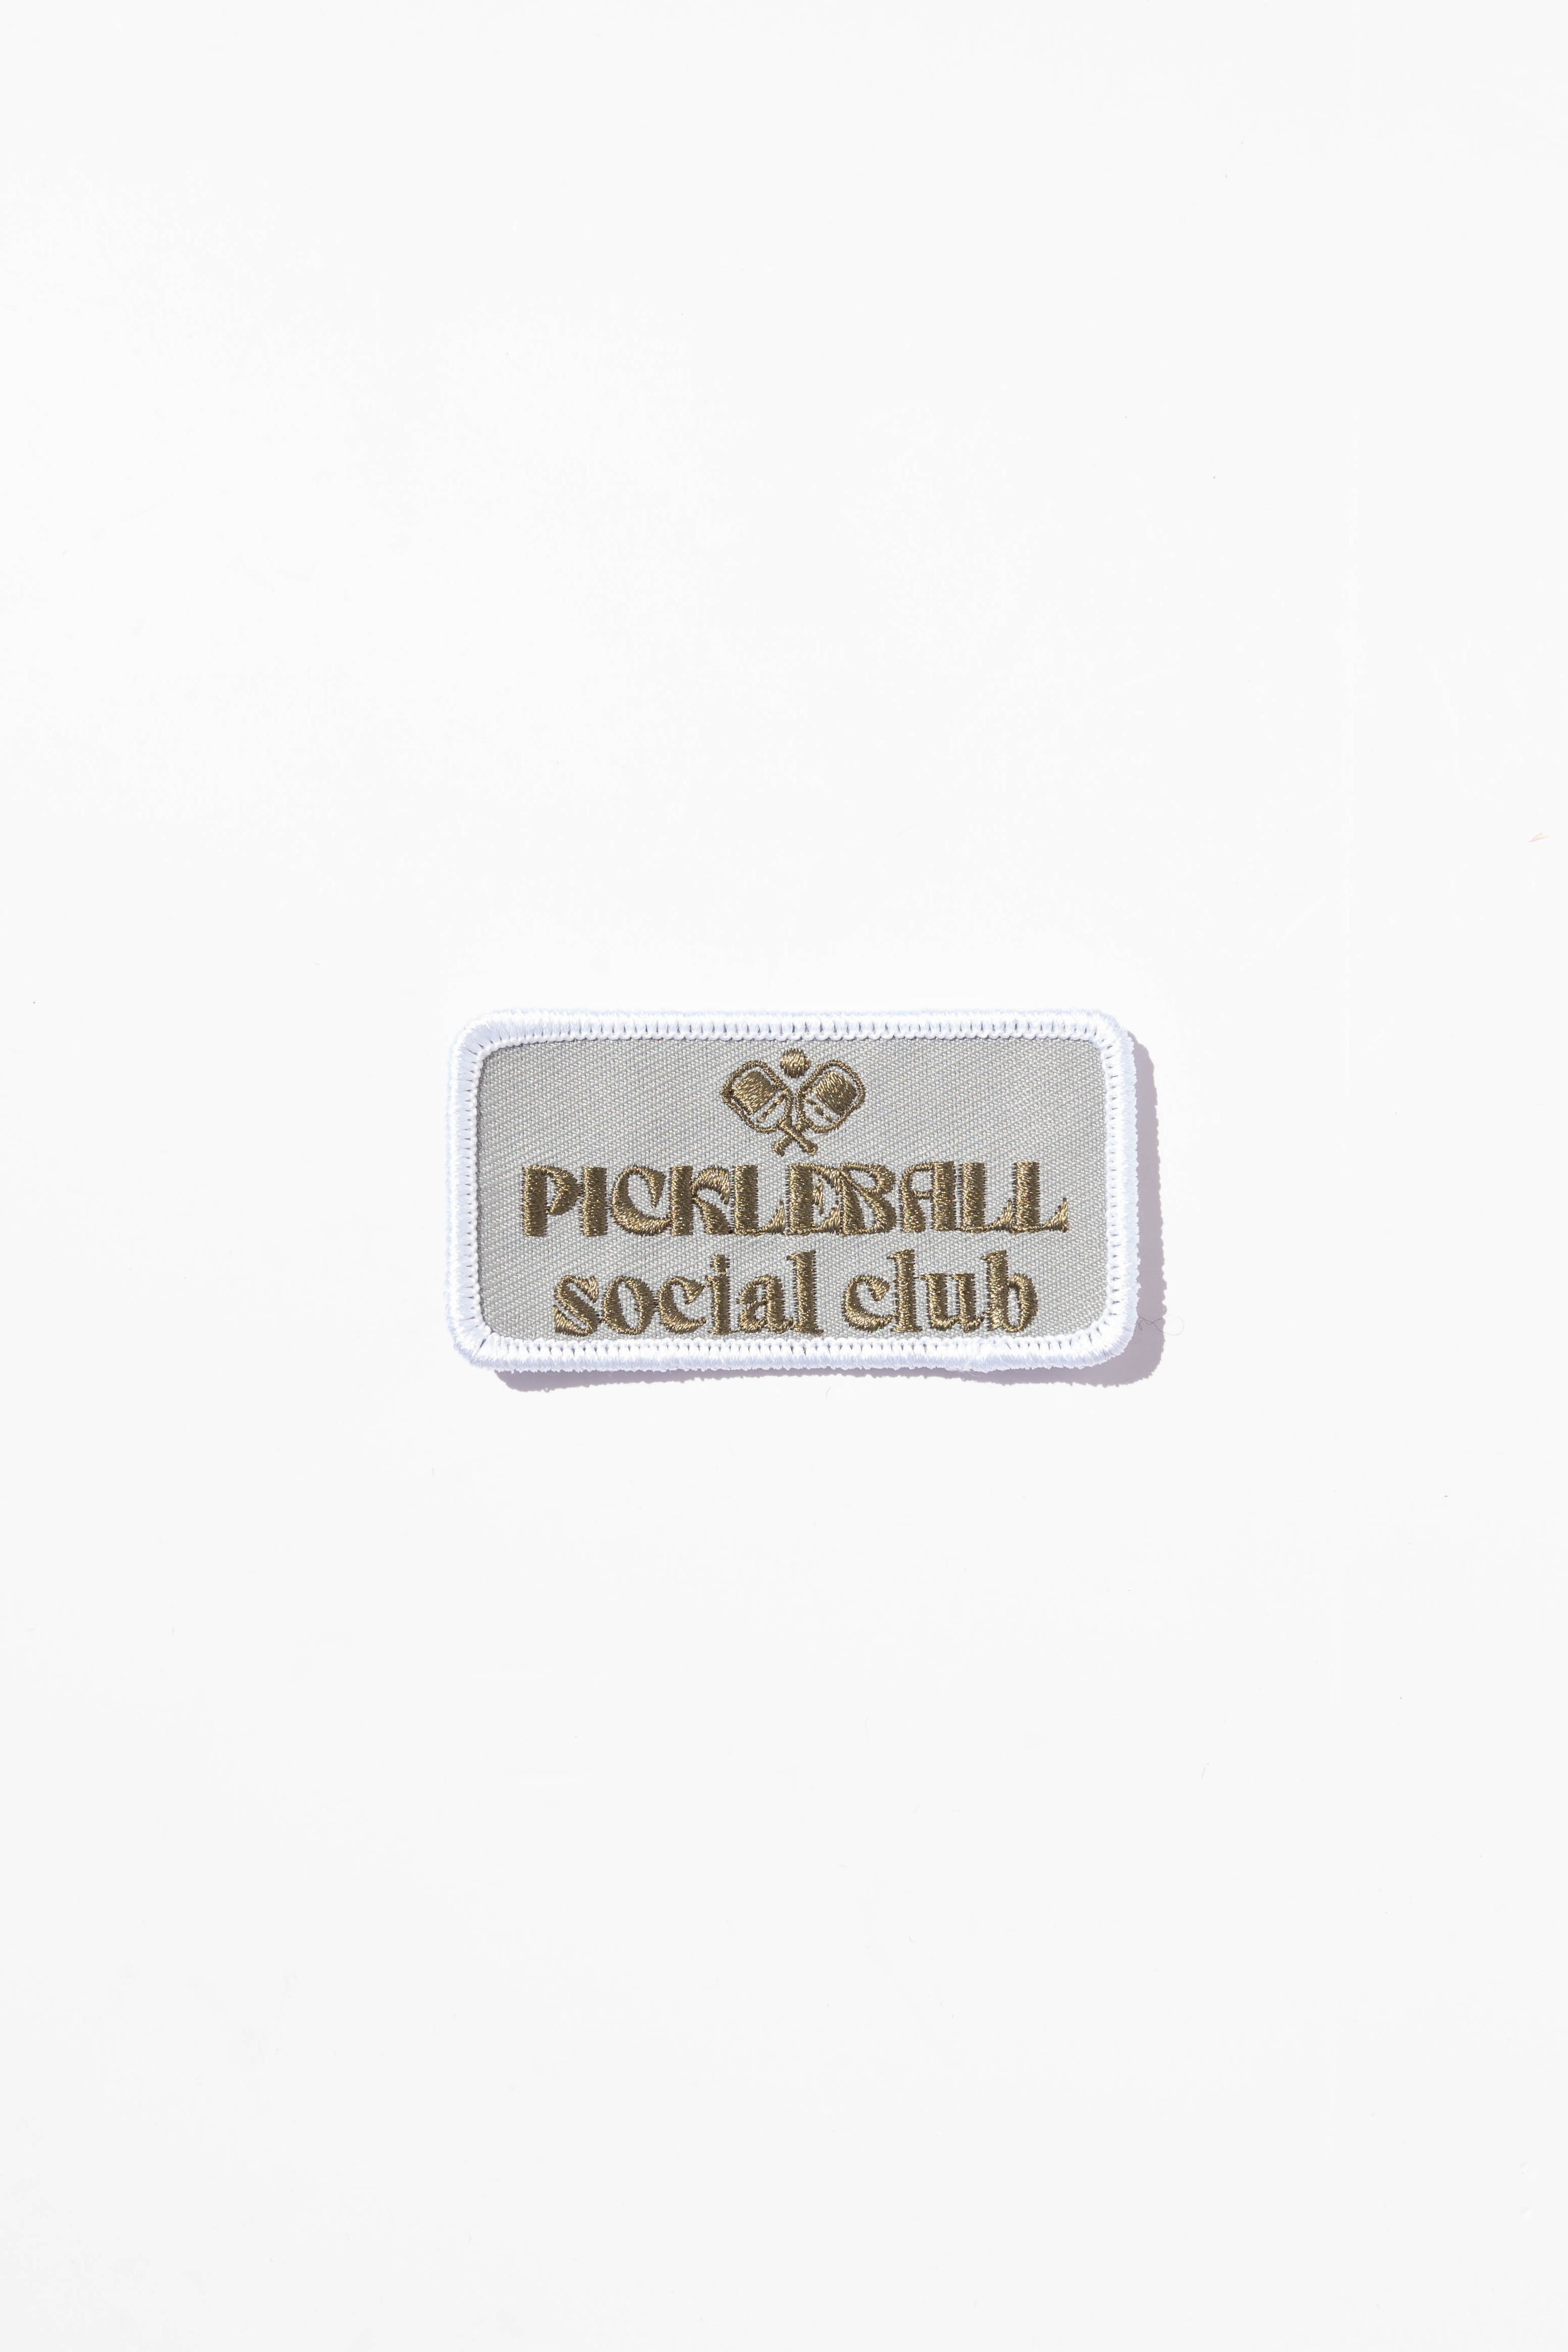 Pickleball Social Club Patch